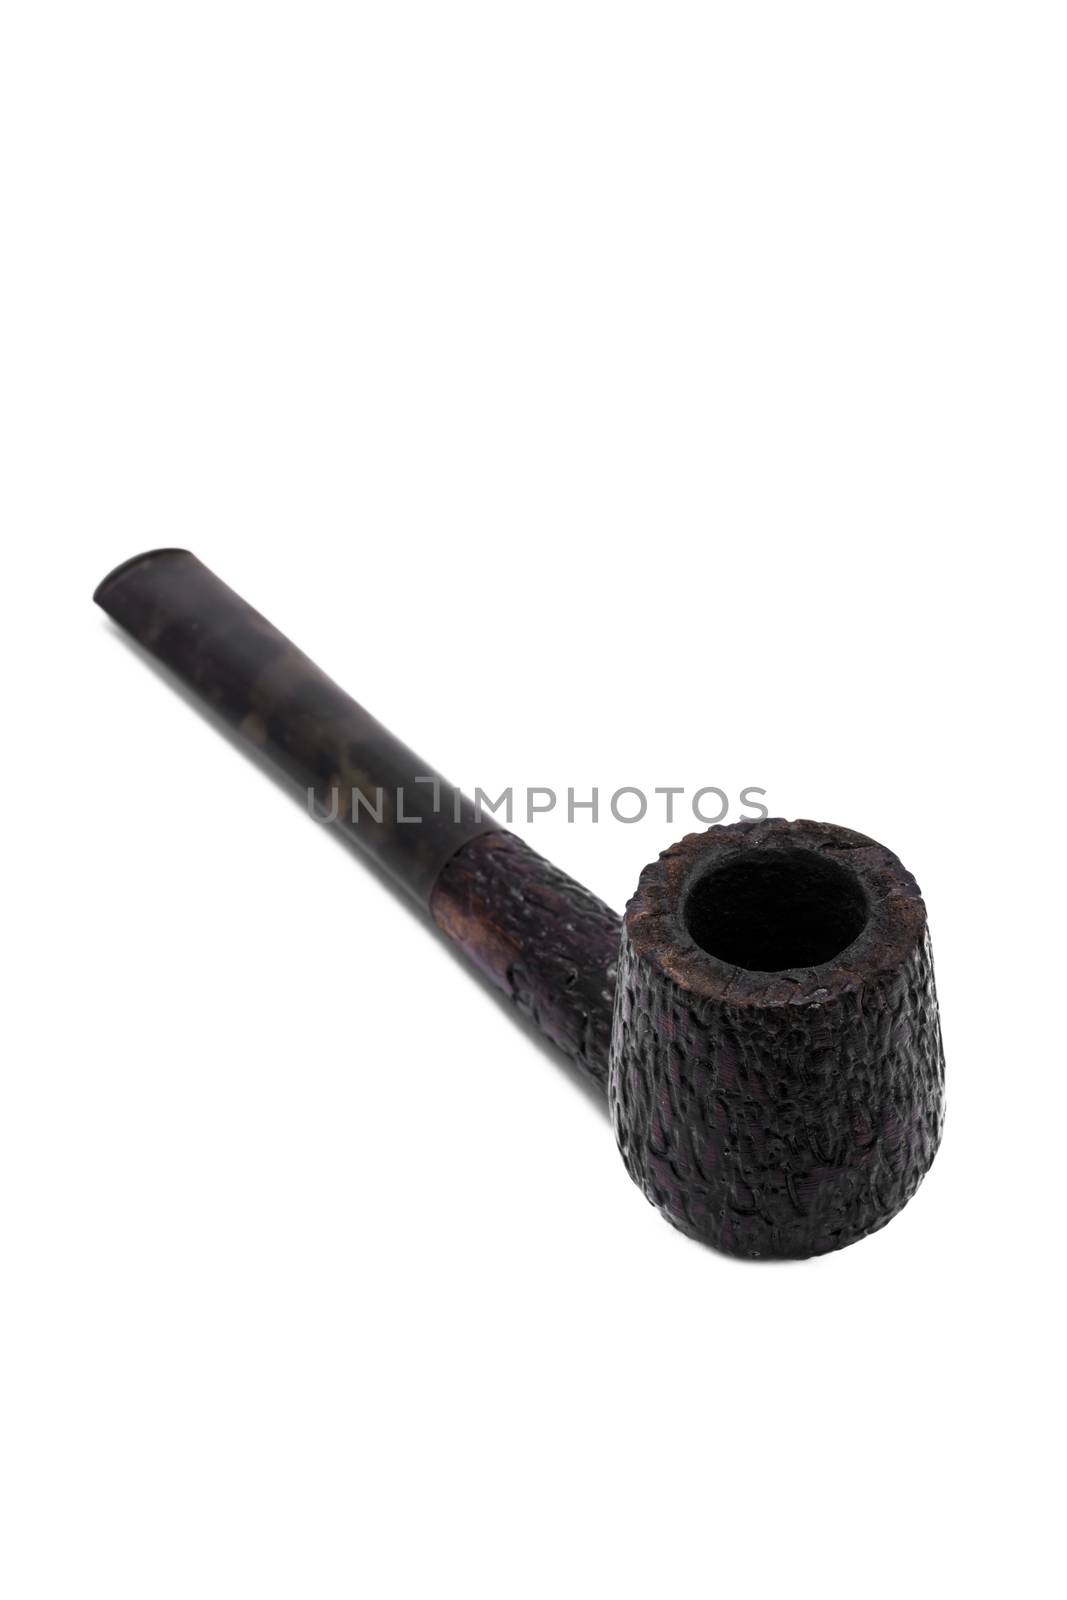 empty tobacco pipe  by LMykola